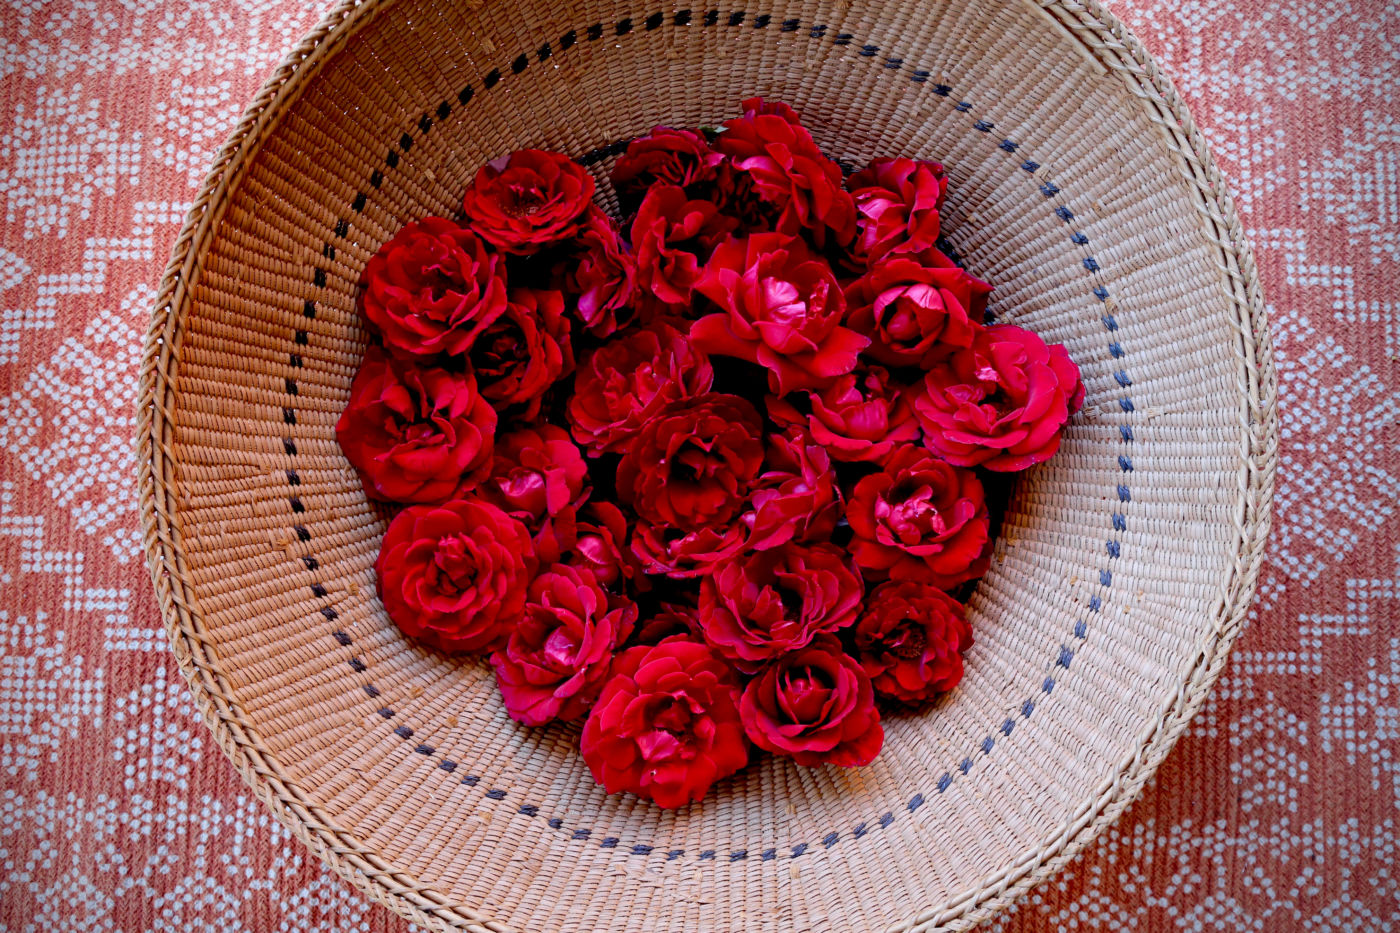 Dozens of harvested roses in a basket.